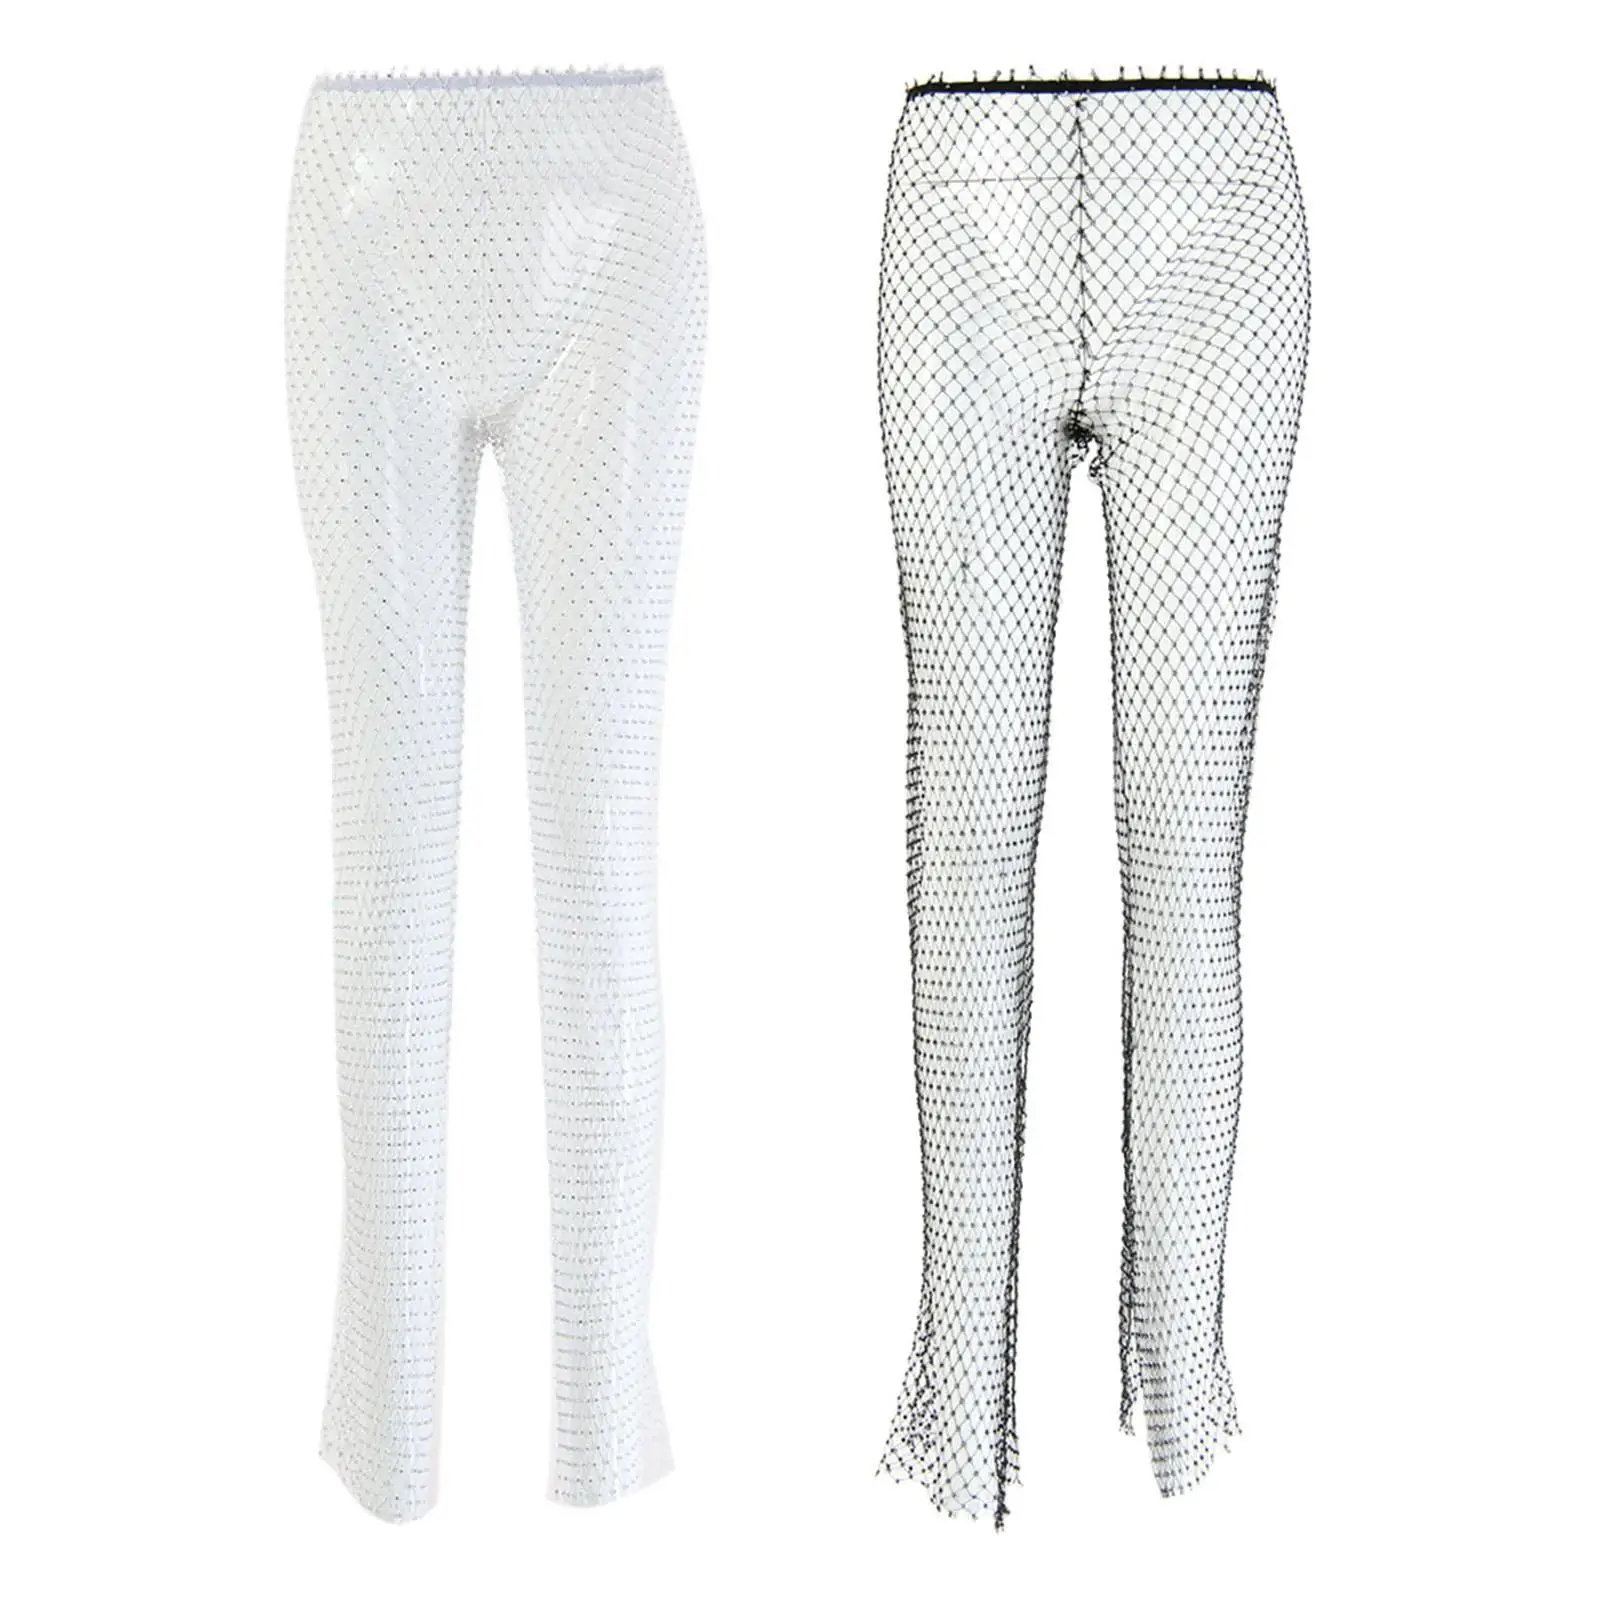 

Women Mesh Sheer Pants Cutout Fishnet Leggings Transparent New Fashion Trousers Beachwear for Daily Wear Disco Clothes Beach